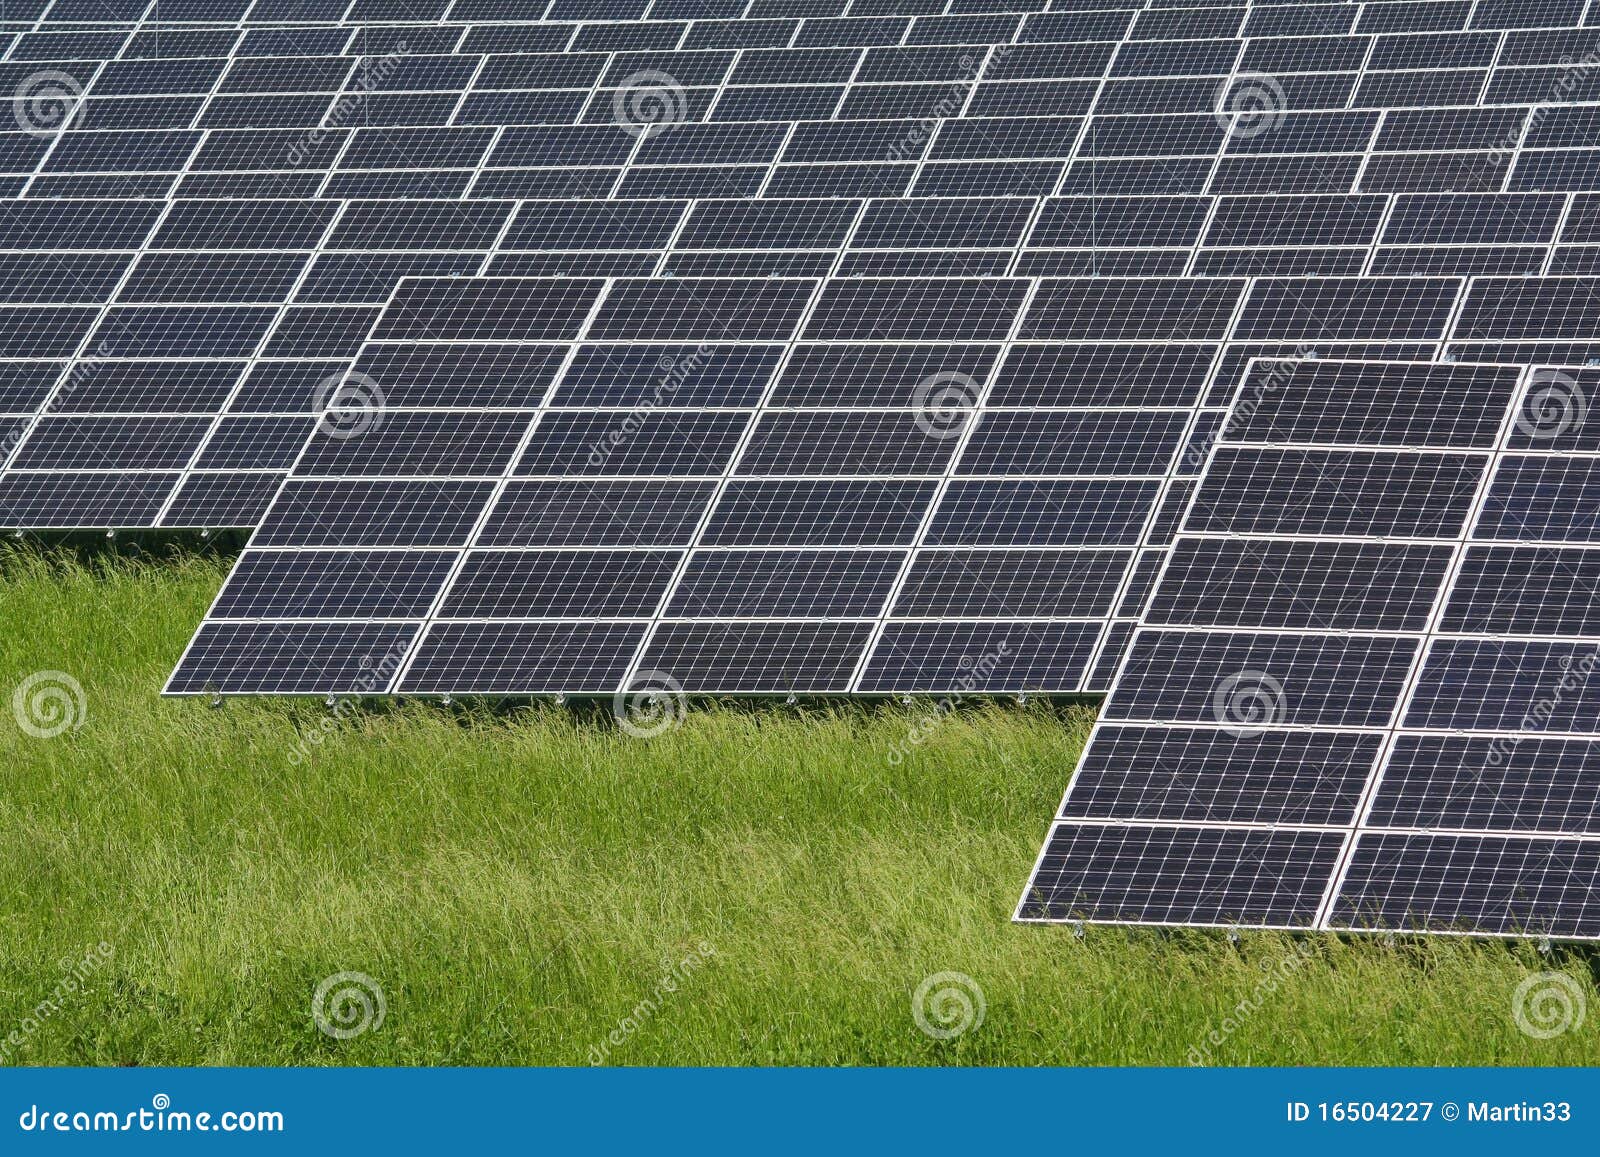 Royalty Free Stock Photography: Solar power plant